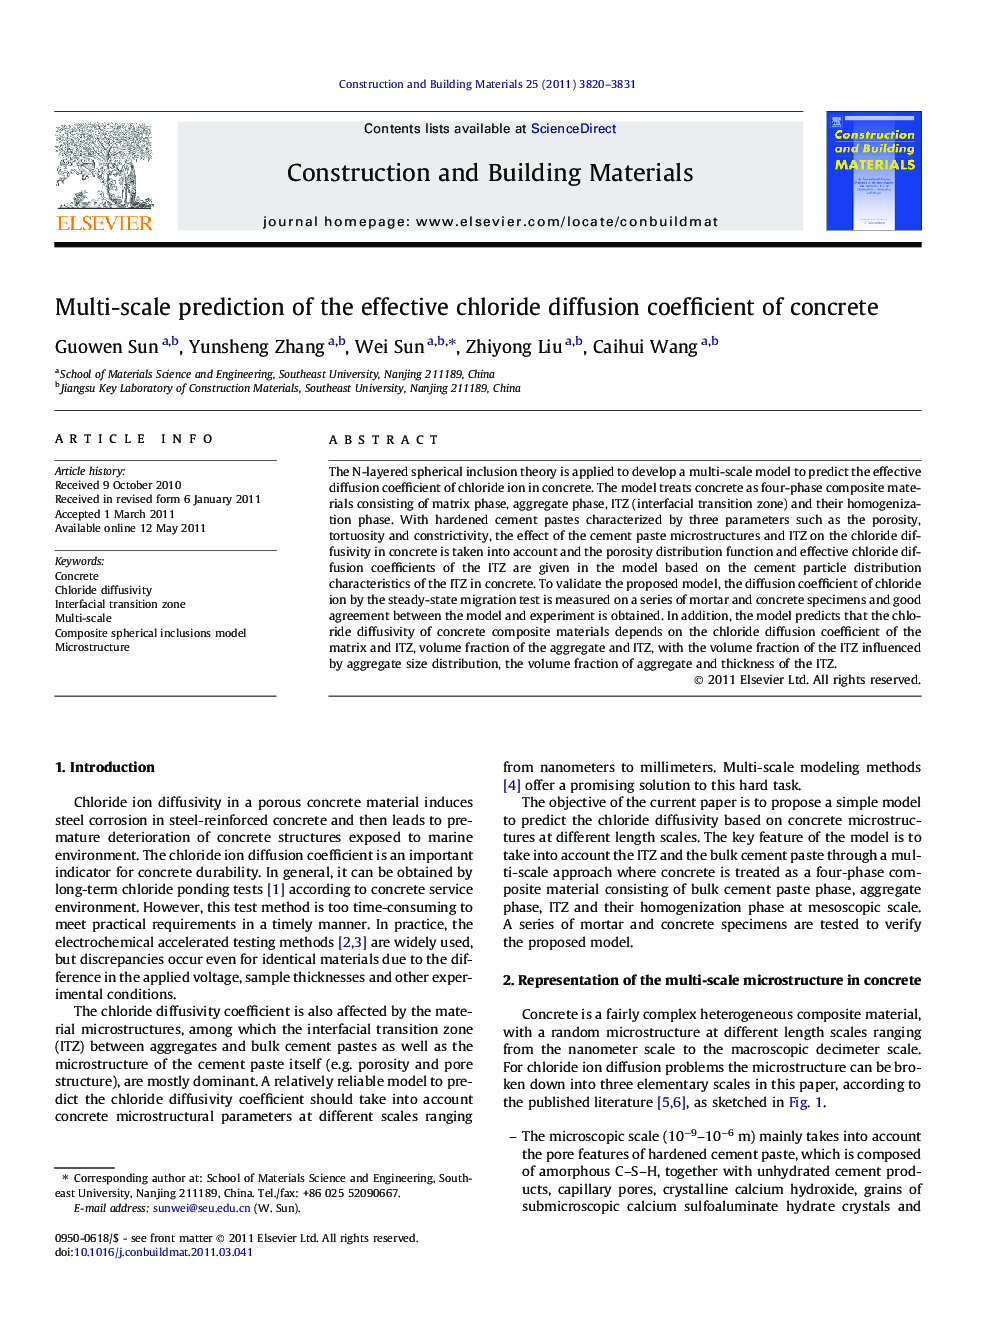 Multi-scale prediction of the effective chloride diffusion coefficient of concrete